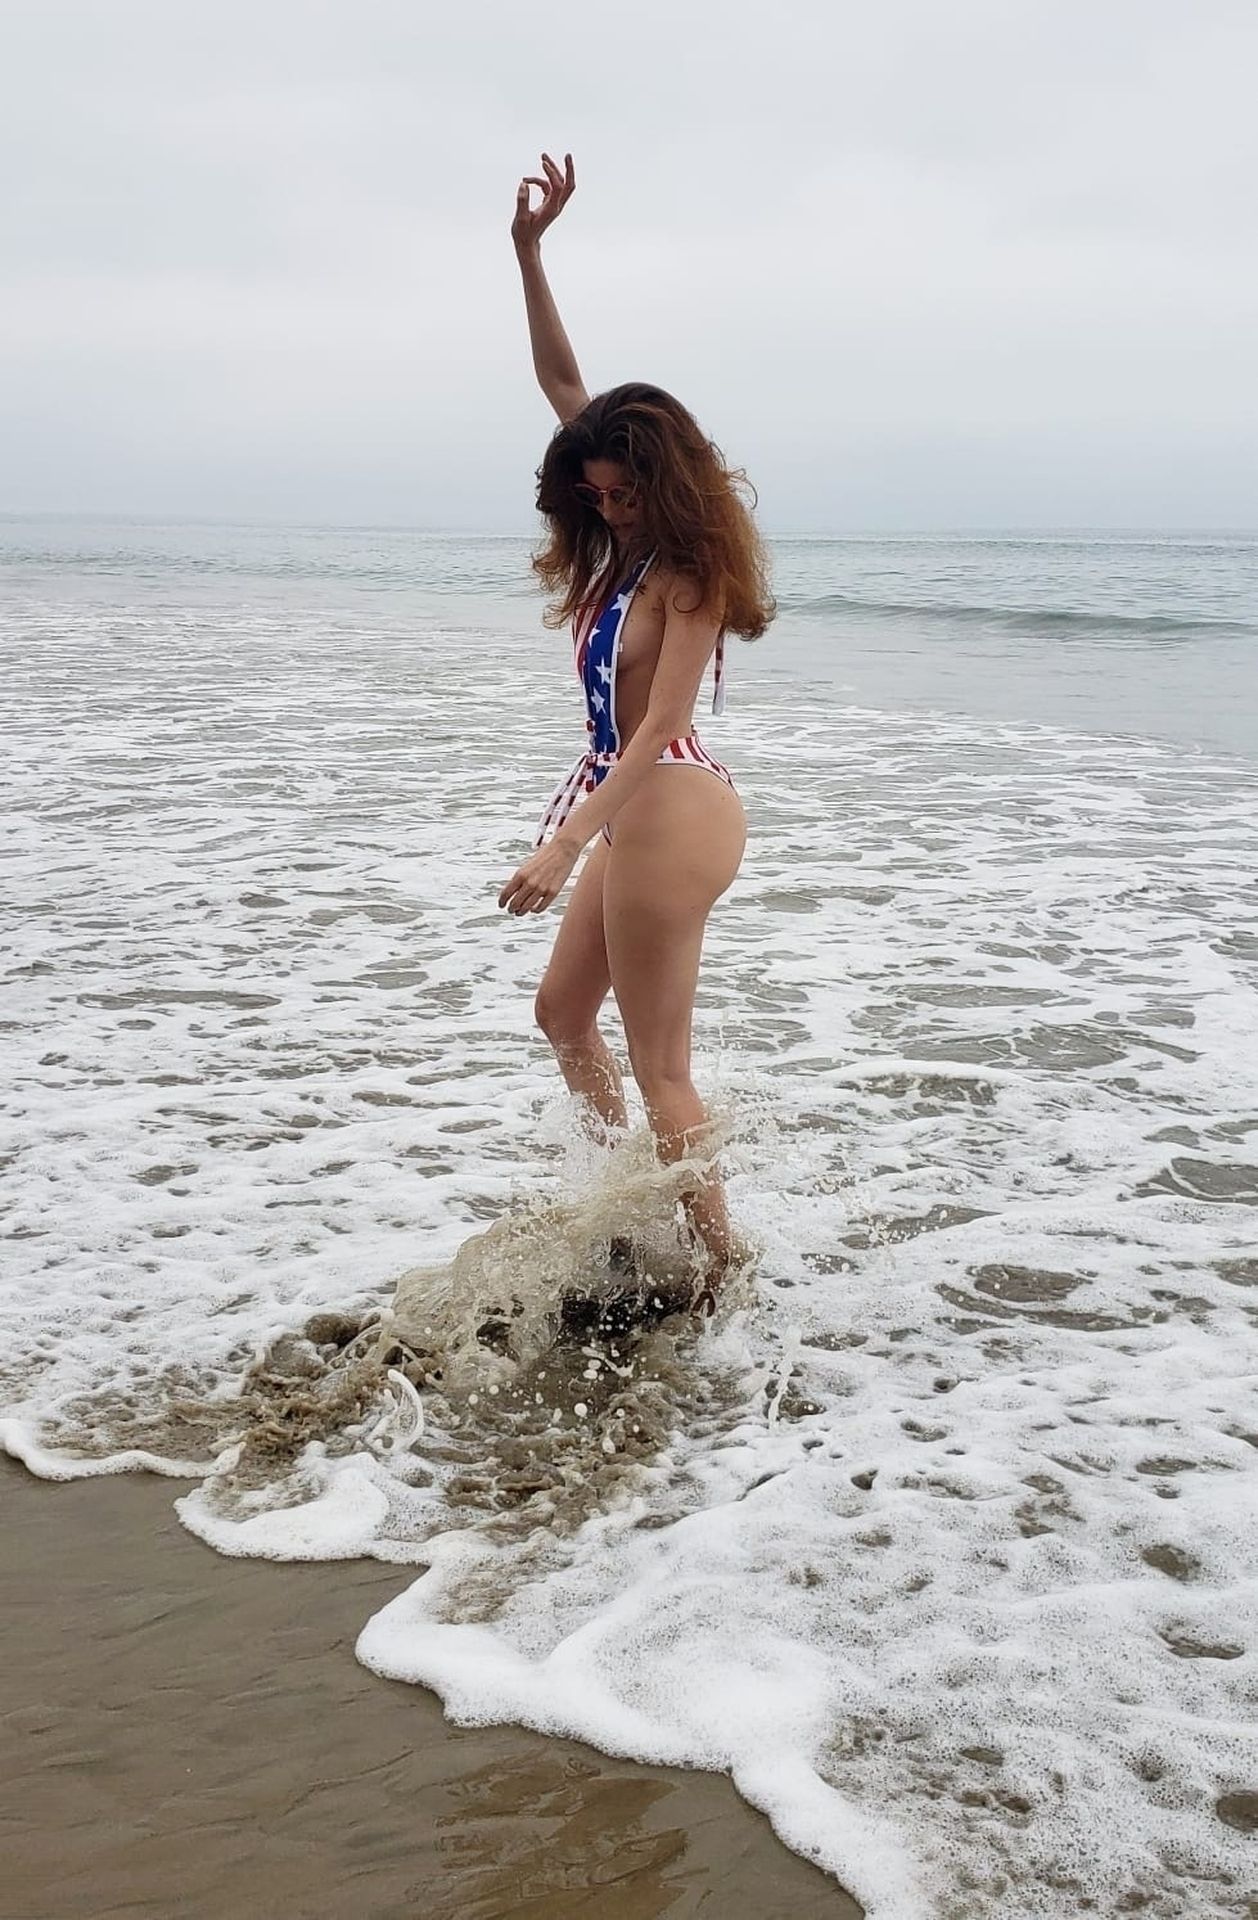 Sexy Blanca Blanco Celebrates the Fourth of July in Malibu (38 Photos)